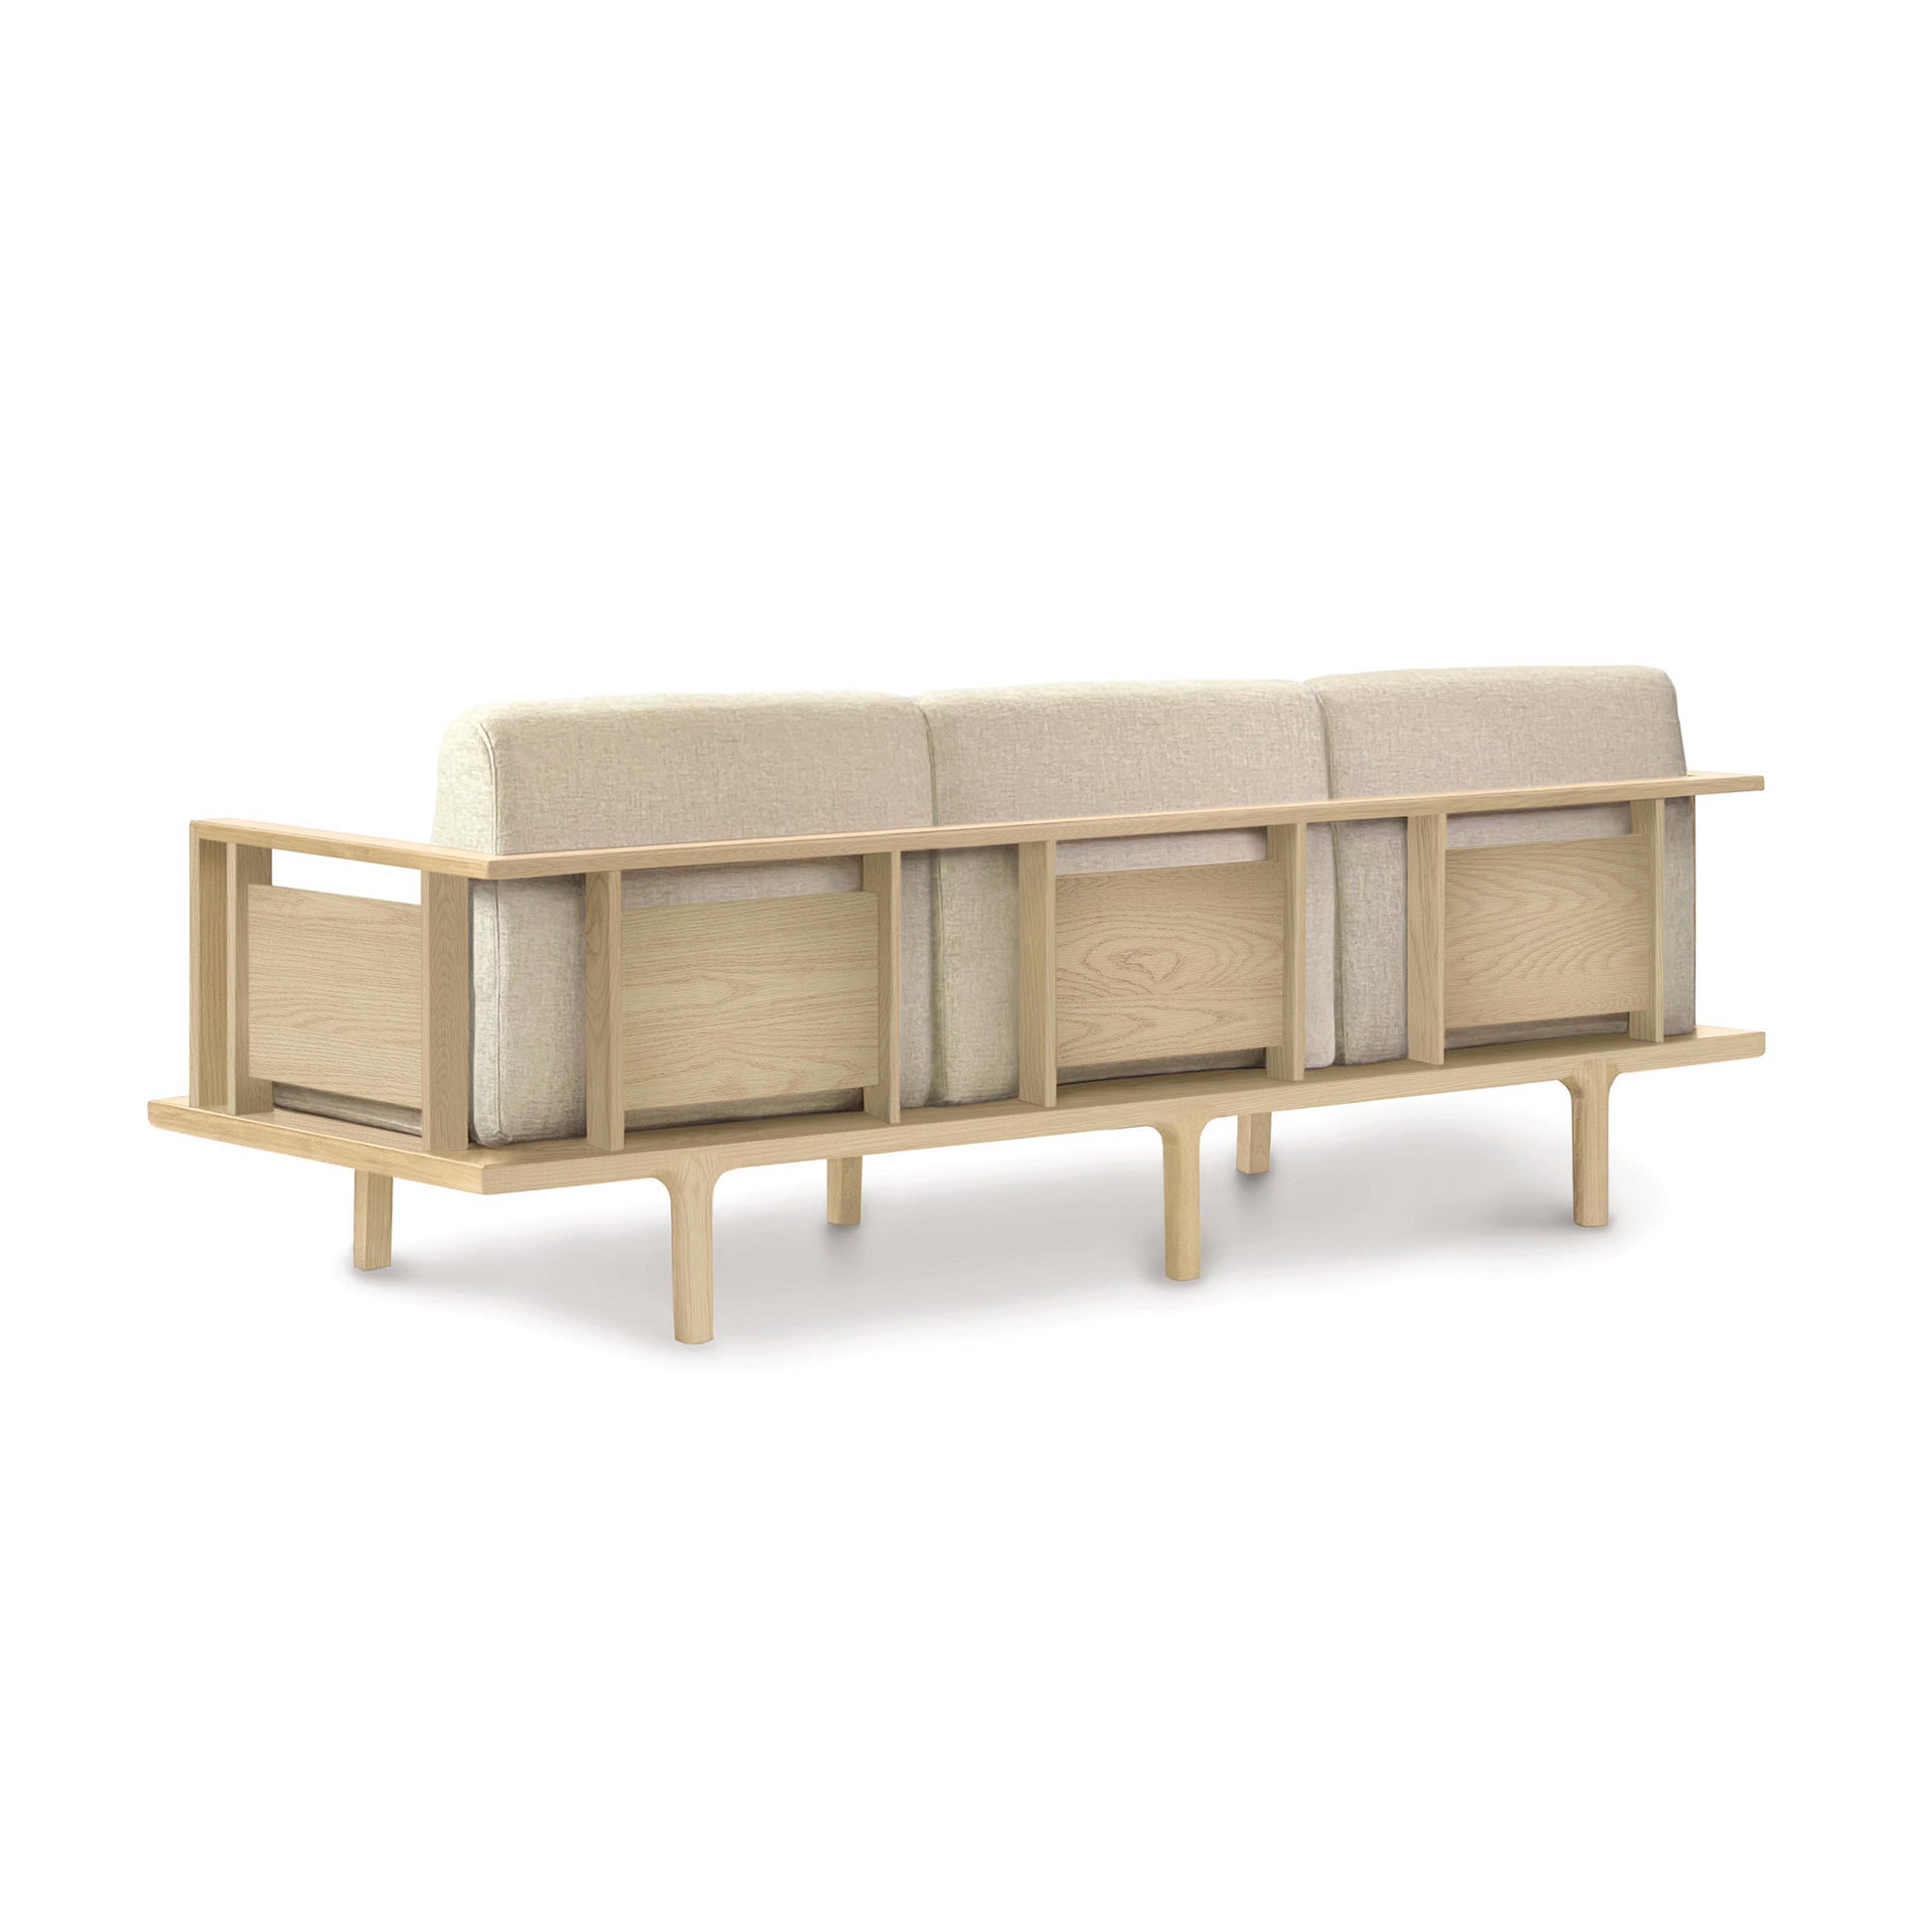 A contemporary designed Copeland Furniture Sierra Oak Upholstered Sofa.